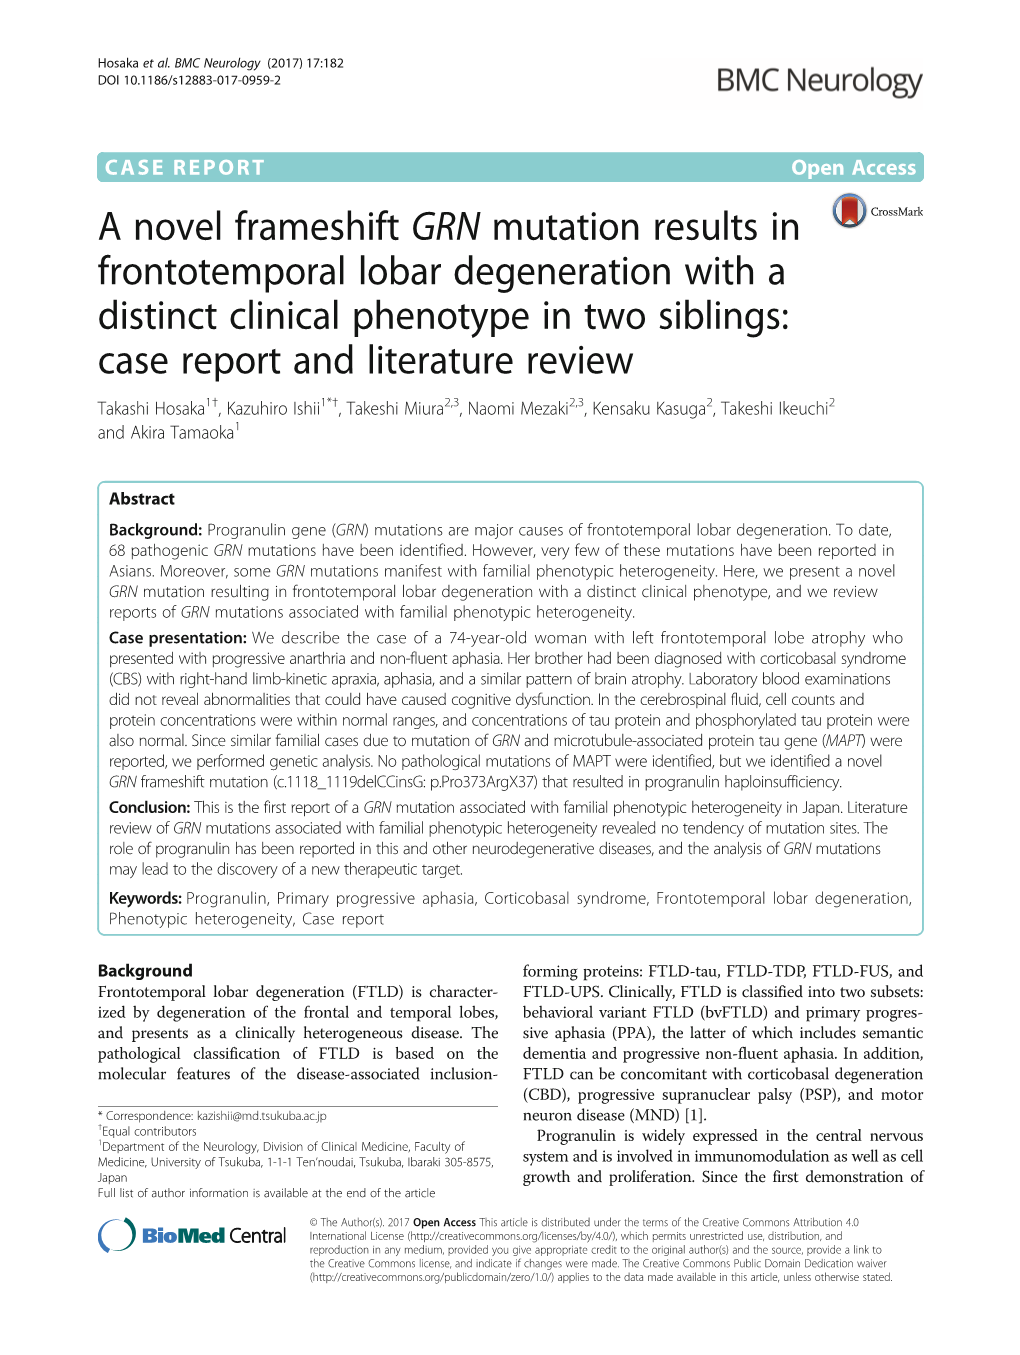 A Novel Frameshift GRN Mutation Results In